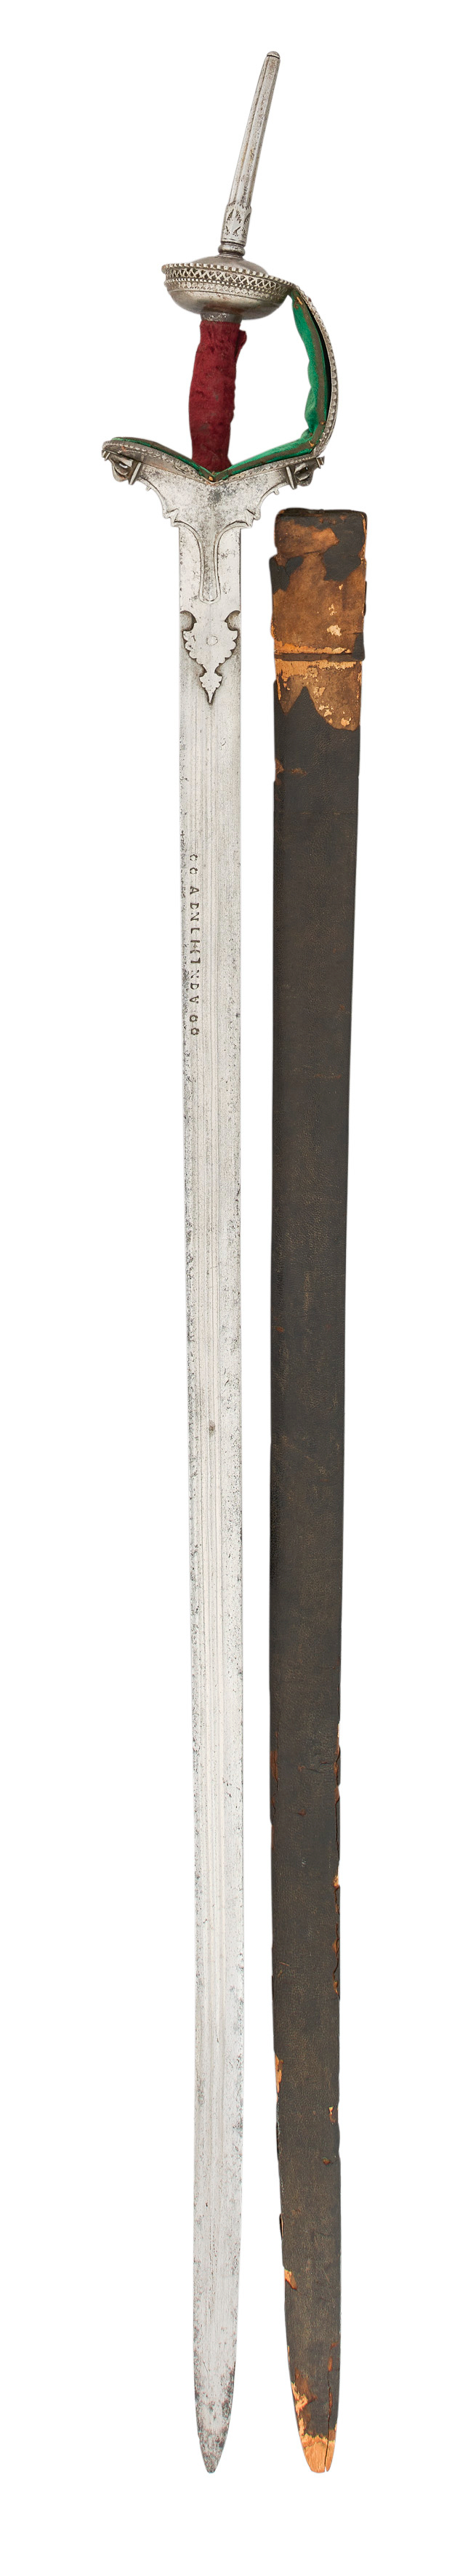 A SOUTH INDIAN SWORD (FIRANGI), 17TH CENTURY, PROBABLY HYDERABAD OR GOLCONDA, ANDHRA PRADESH